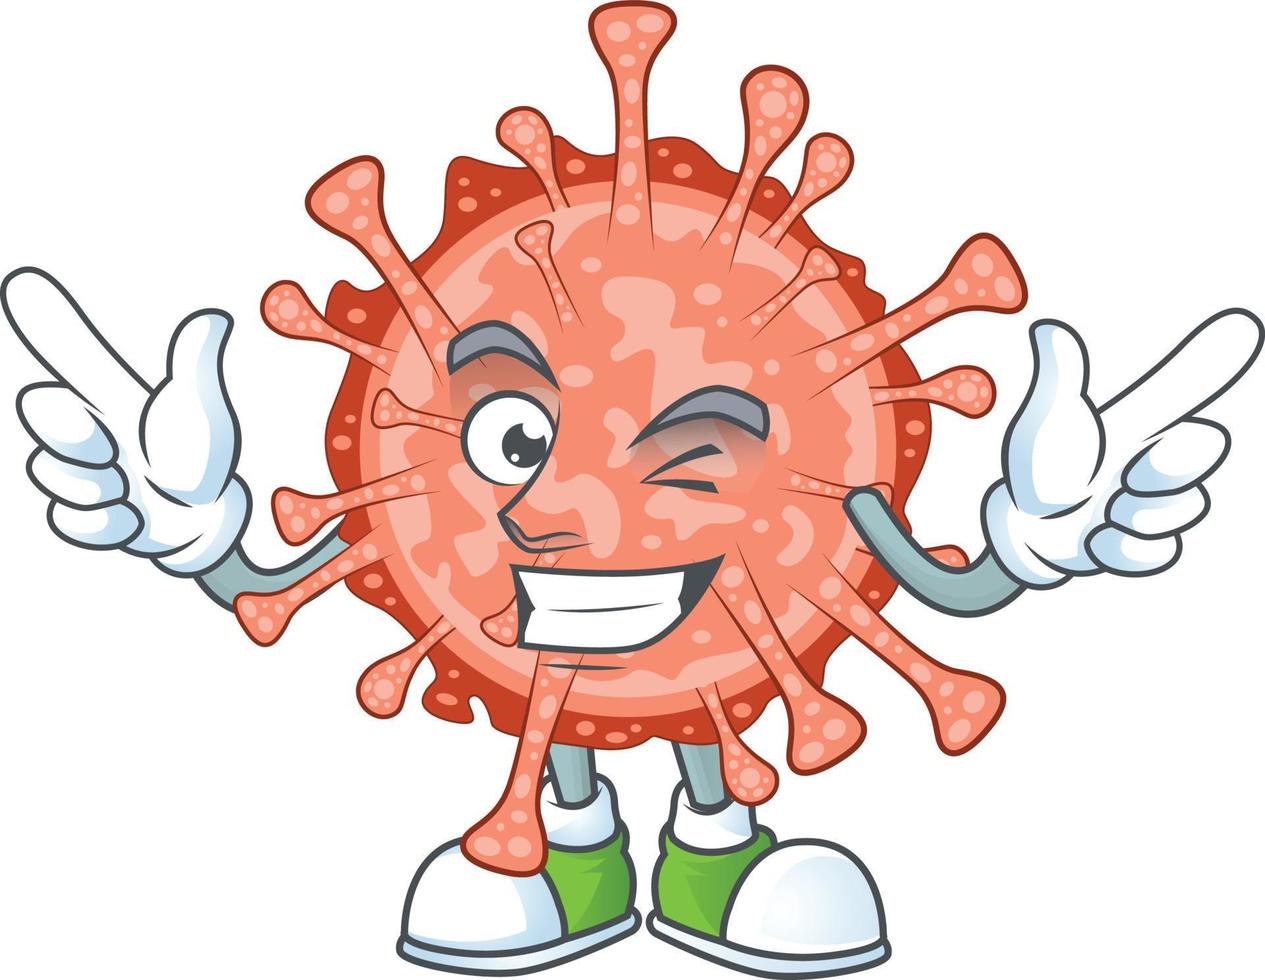 un dibujos animados personaje de bulbul coronavirus vector